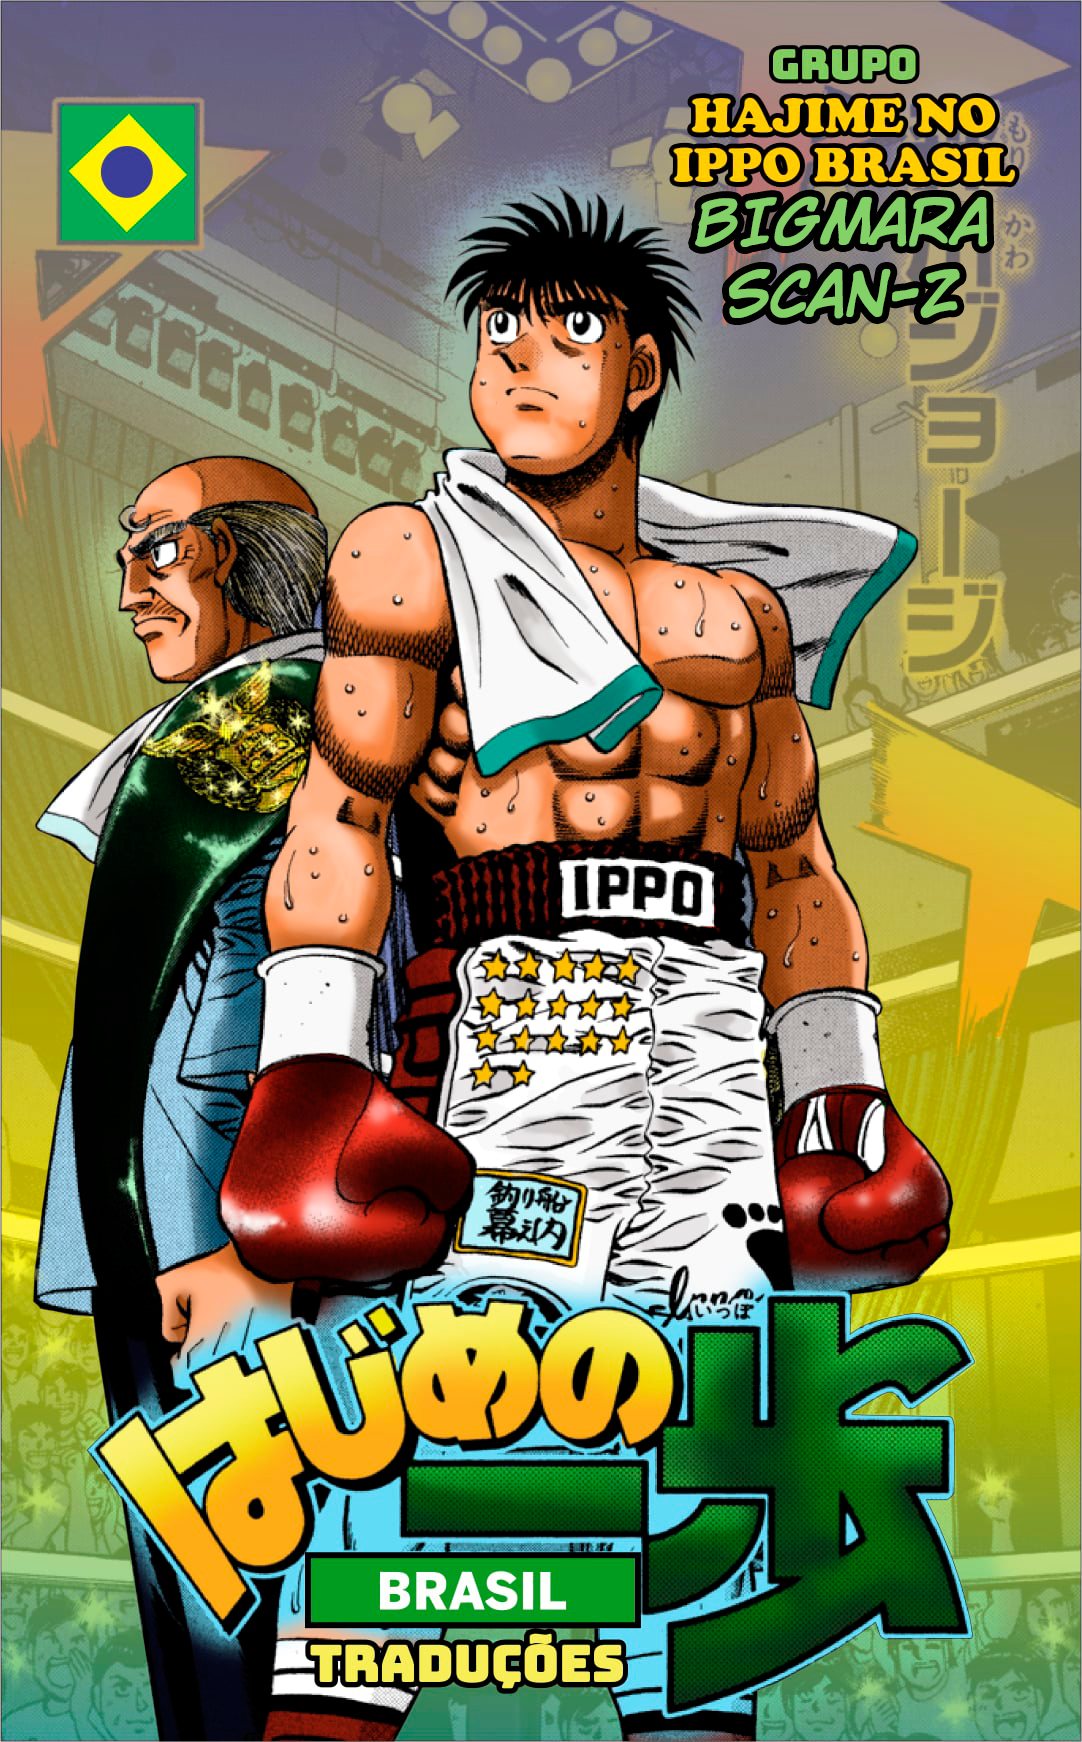 Hajime no Ippo Extreme - Link do capítulo em pt-br:  manga/hajime-no-ippo/219986/capitulo-1297#/!page0